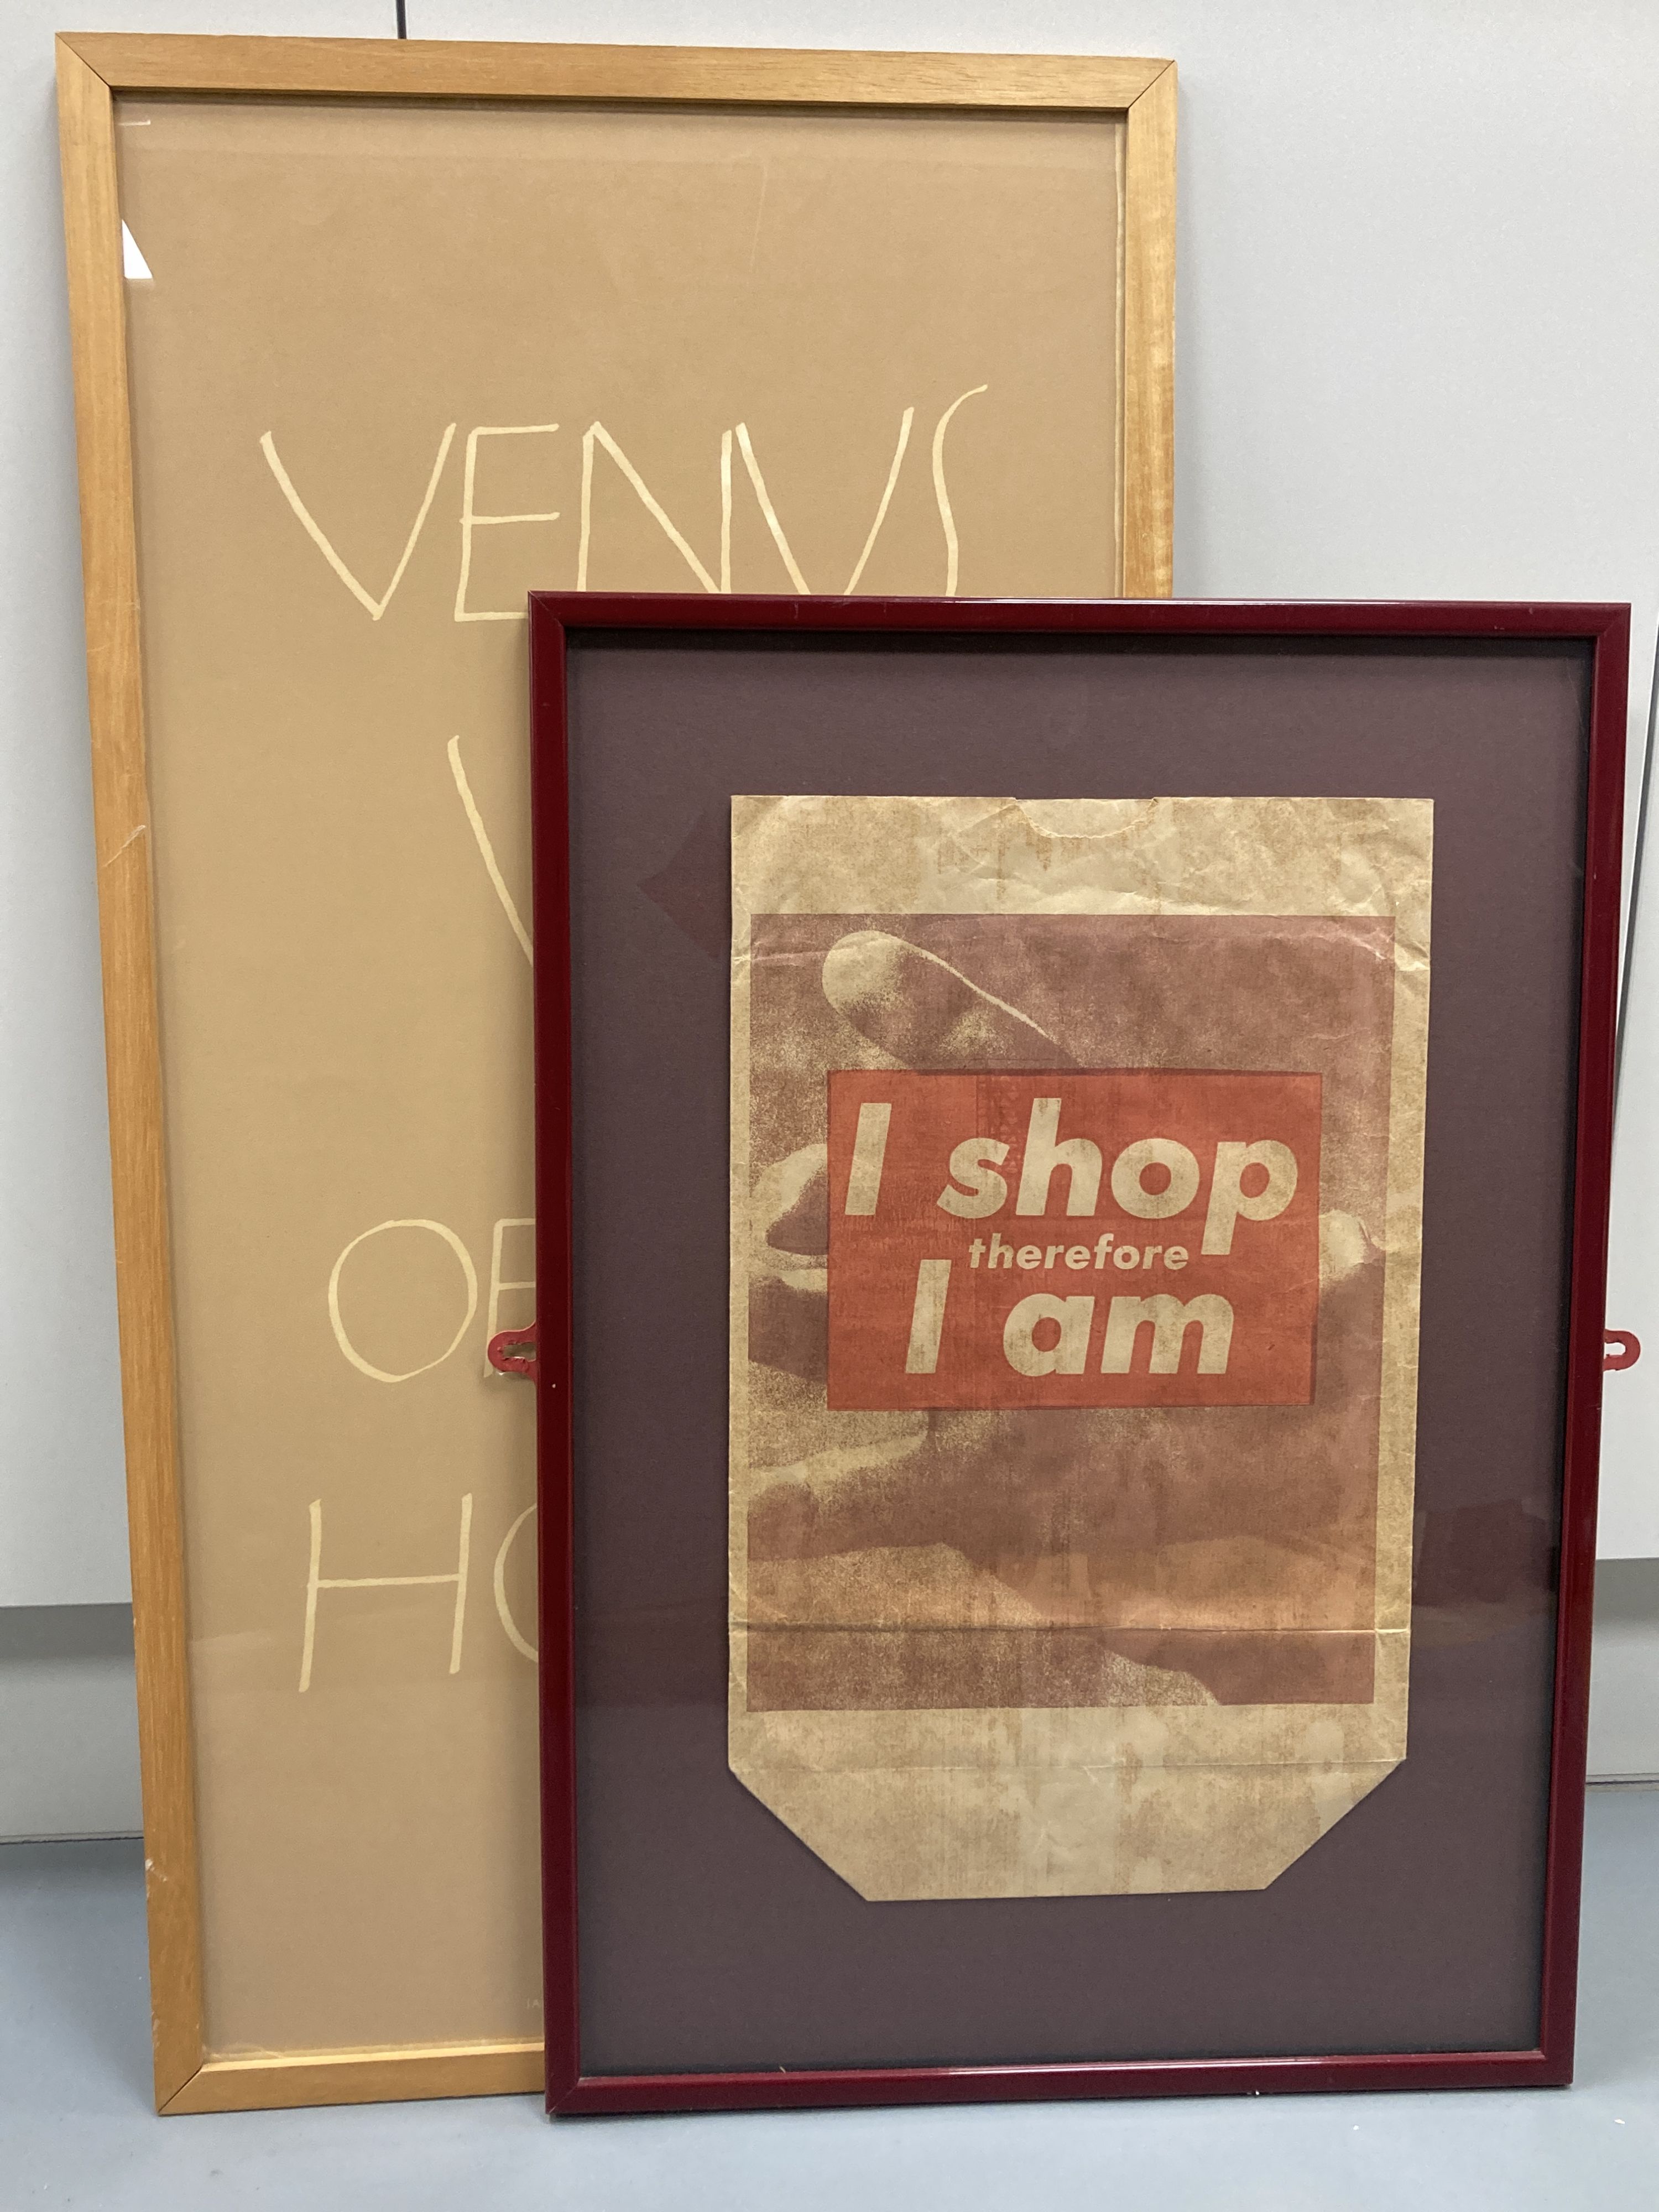 Barbara Kruger (1945-), photo lithograph on shopping bag, I shop therefore I am 1990, 44 x 27cm, and Ian Hamilton Finlay print, Venu